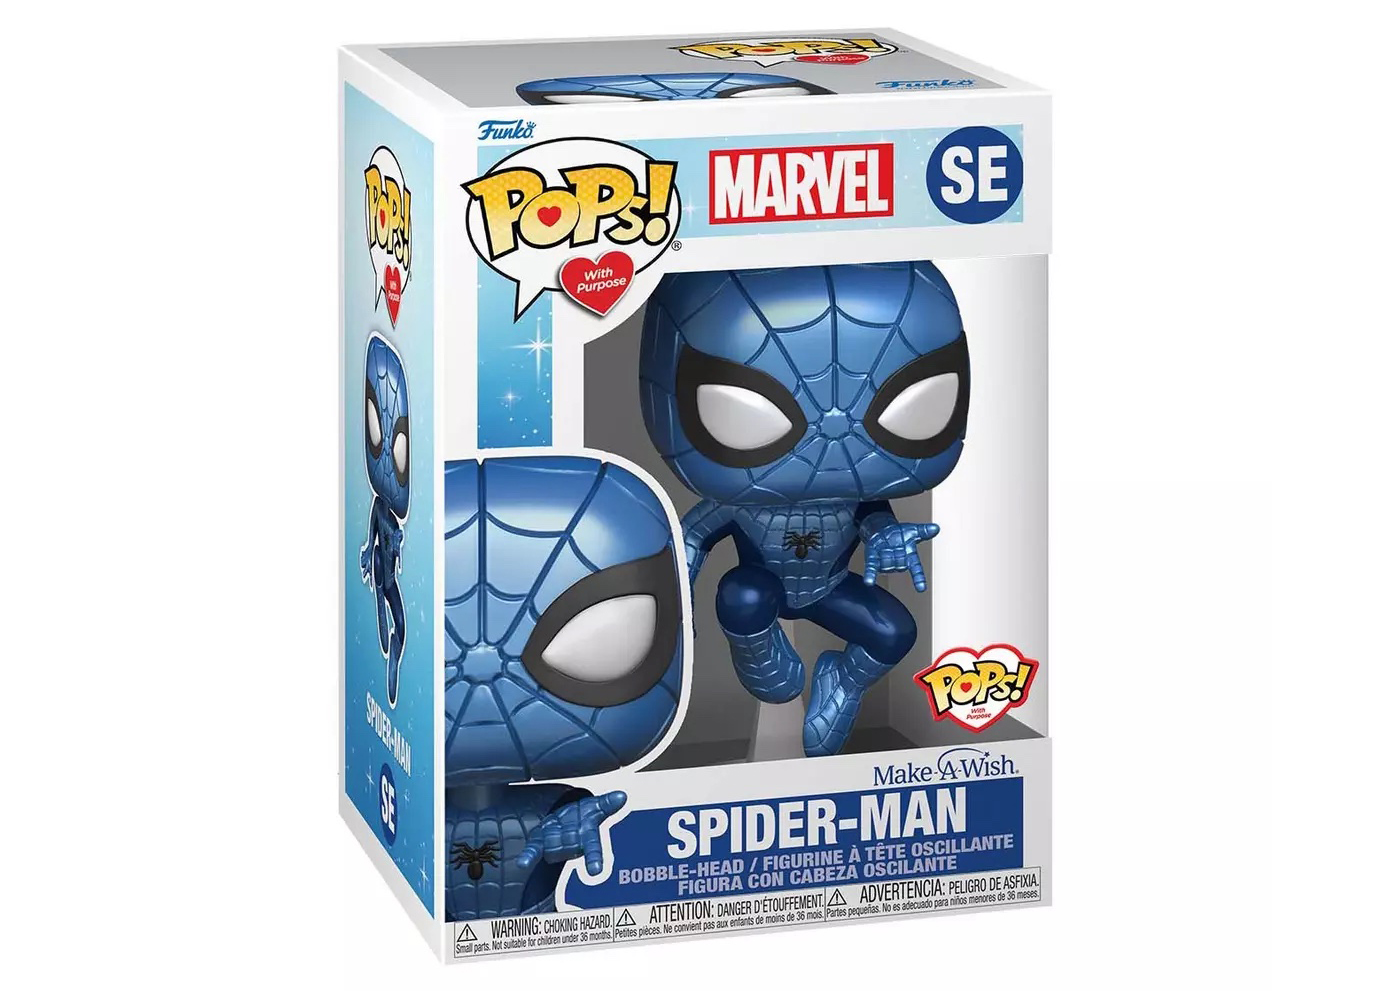 Funko Pop! Make-A-Wish Marvel Spider-Man Pops With Purpose